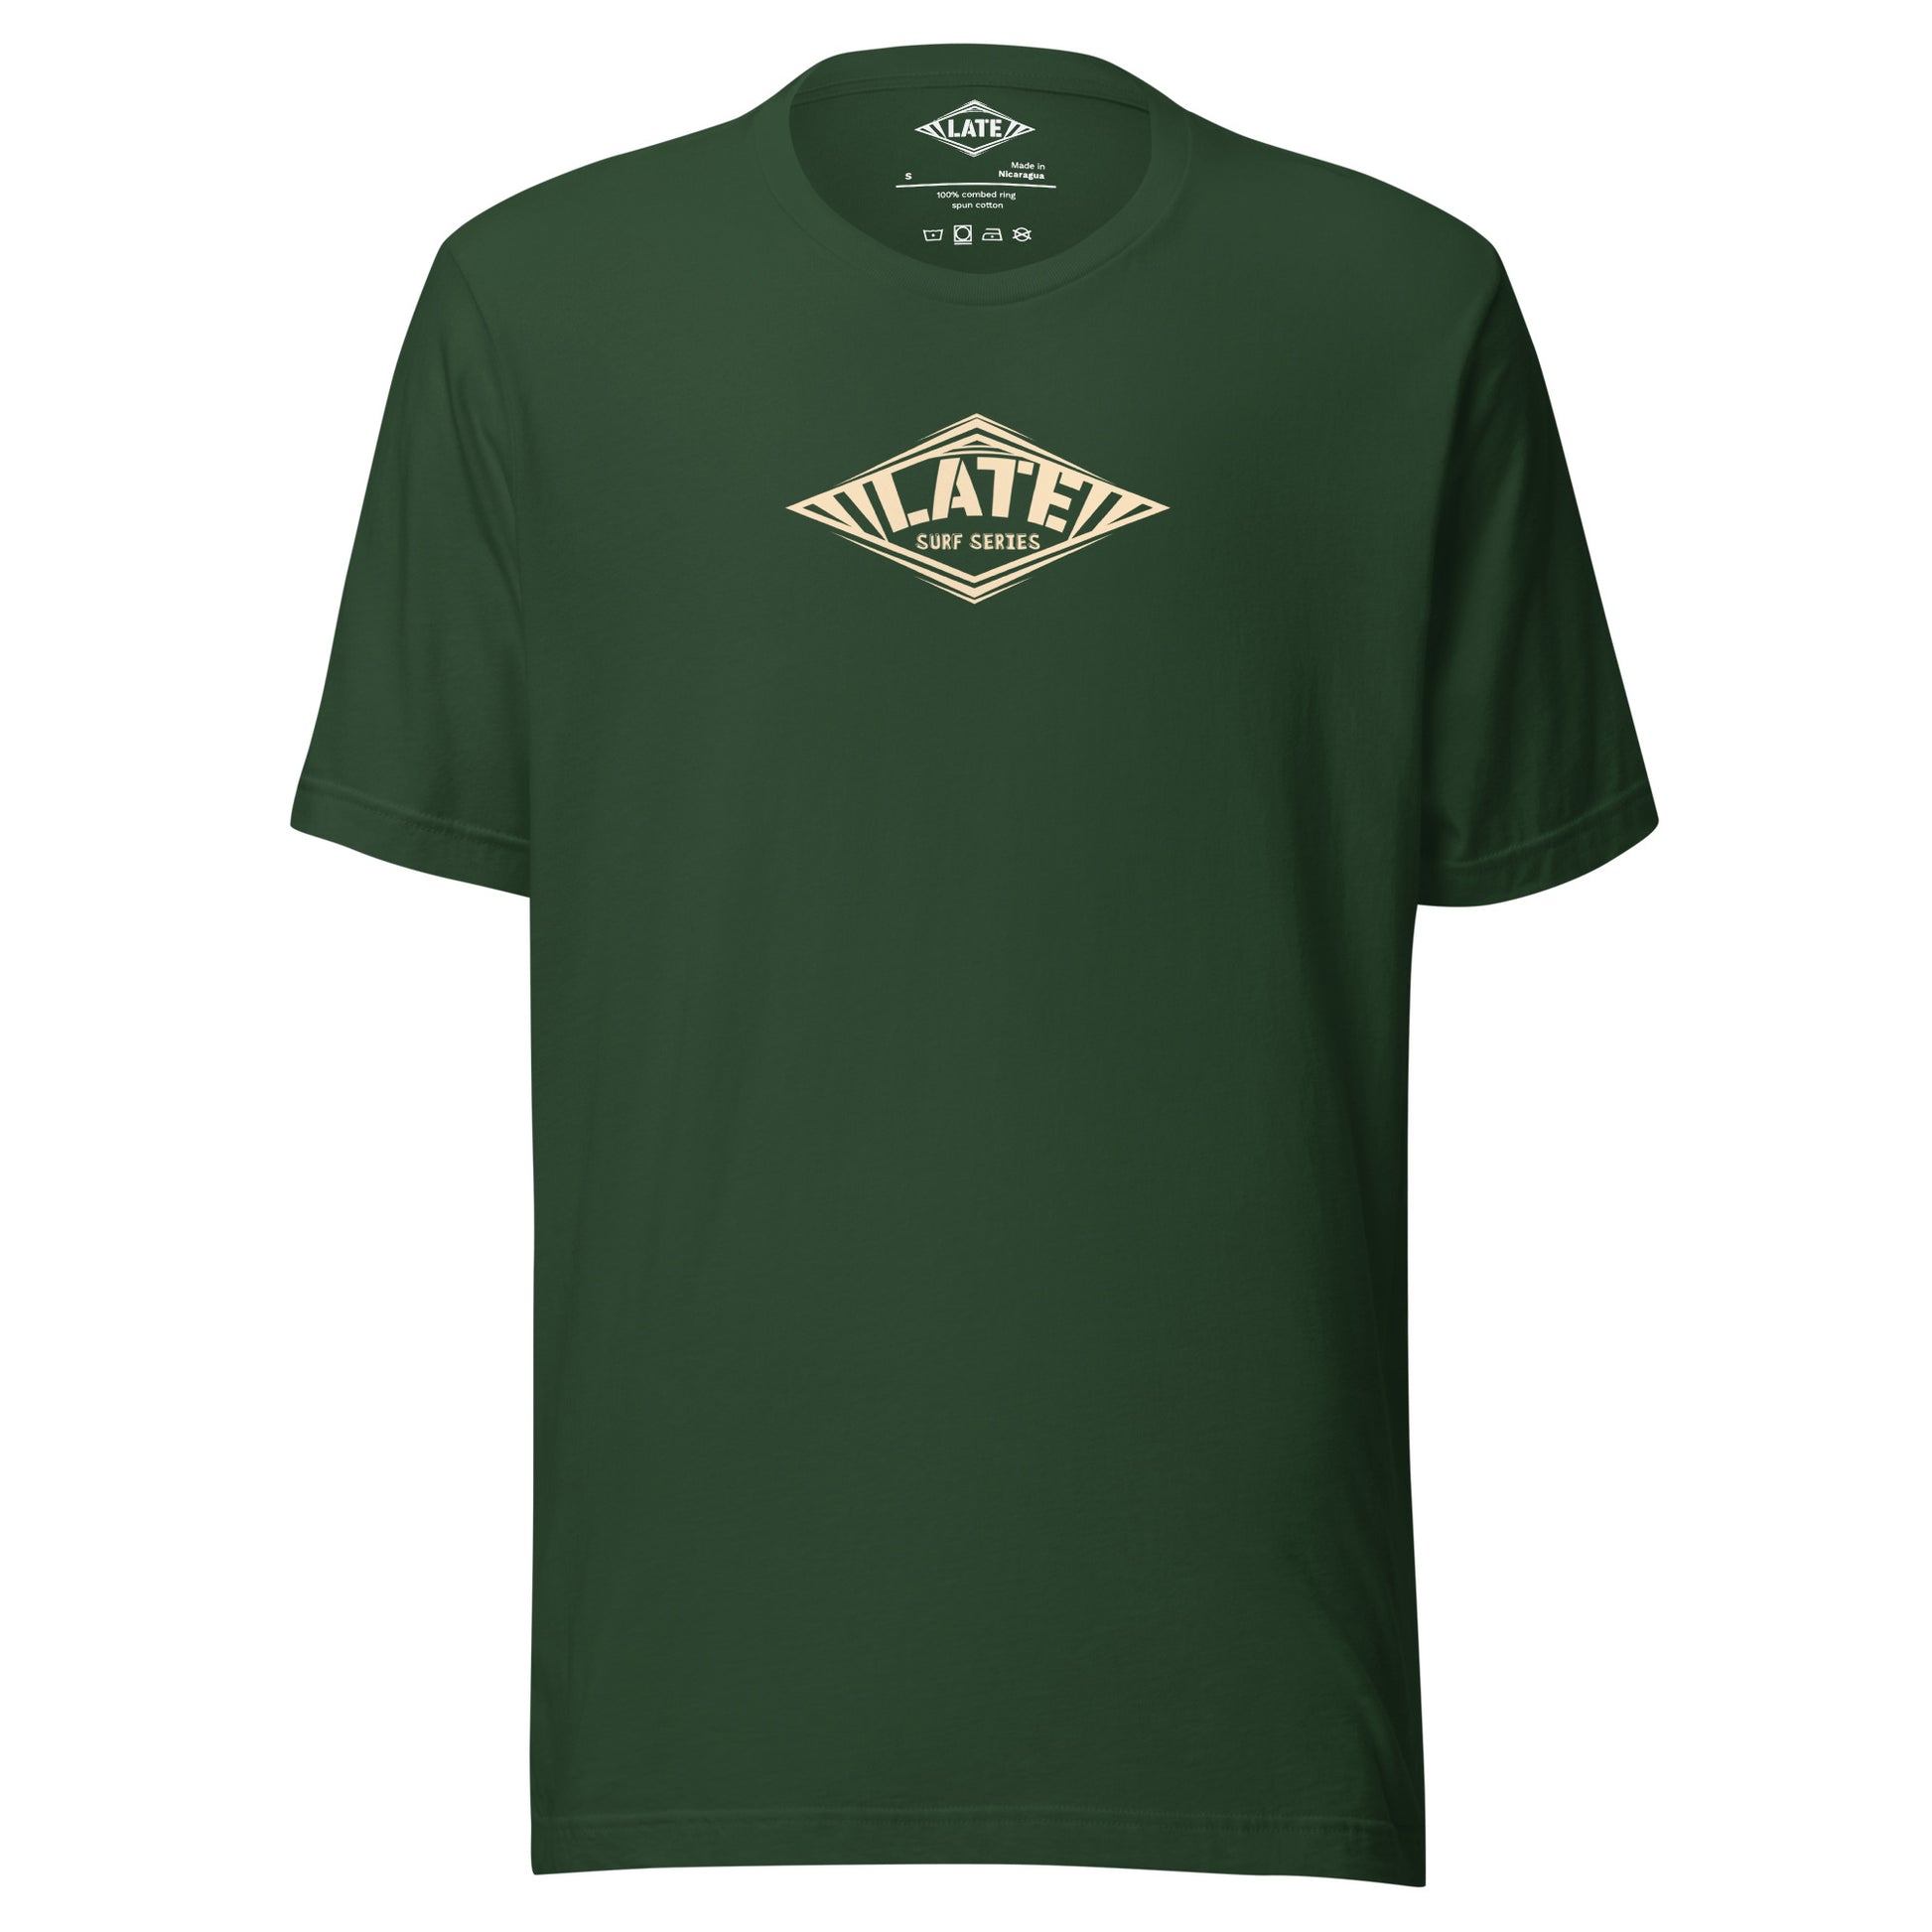 T-Shirt Take On The Elements style hurley texte surf series, et logo Late tshirt de face couleur vert forêt